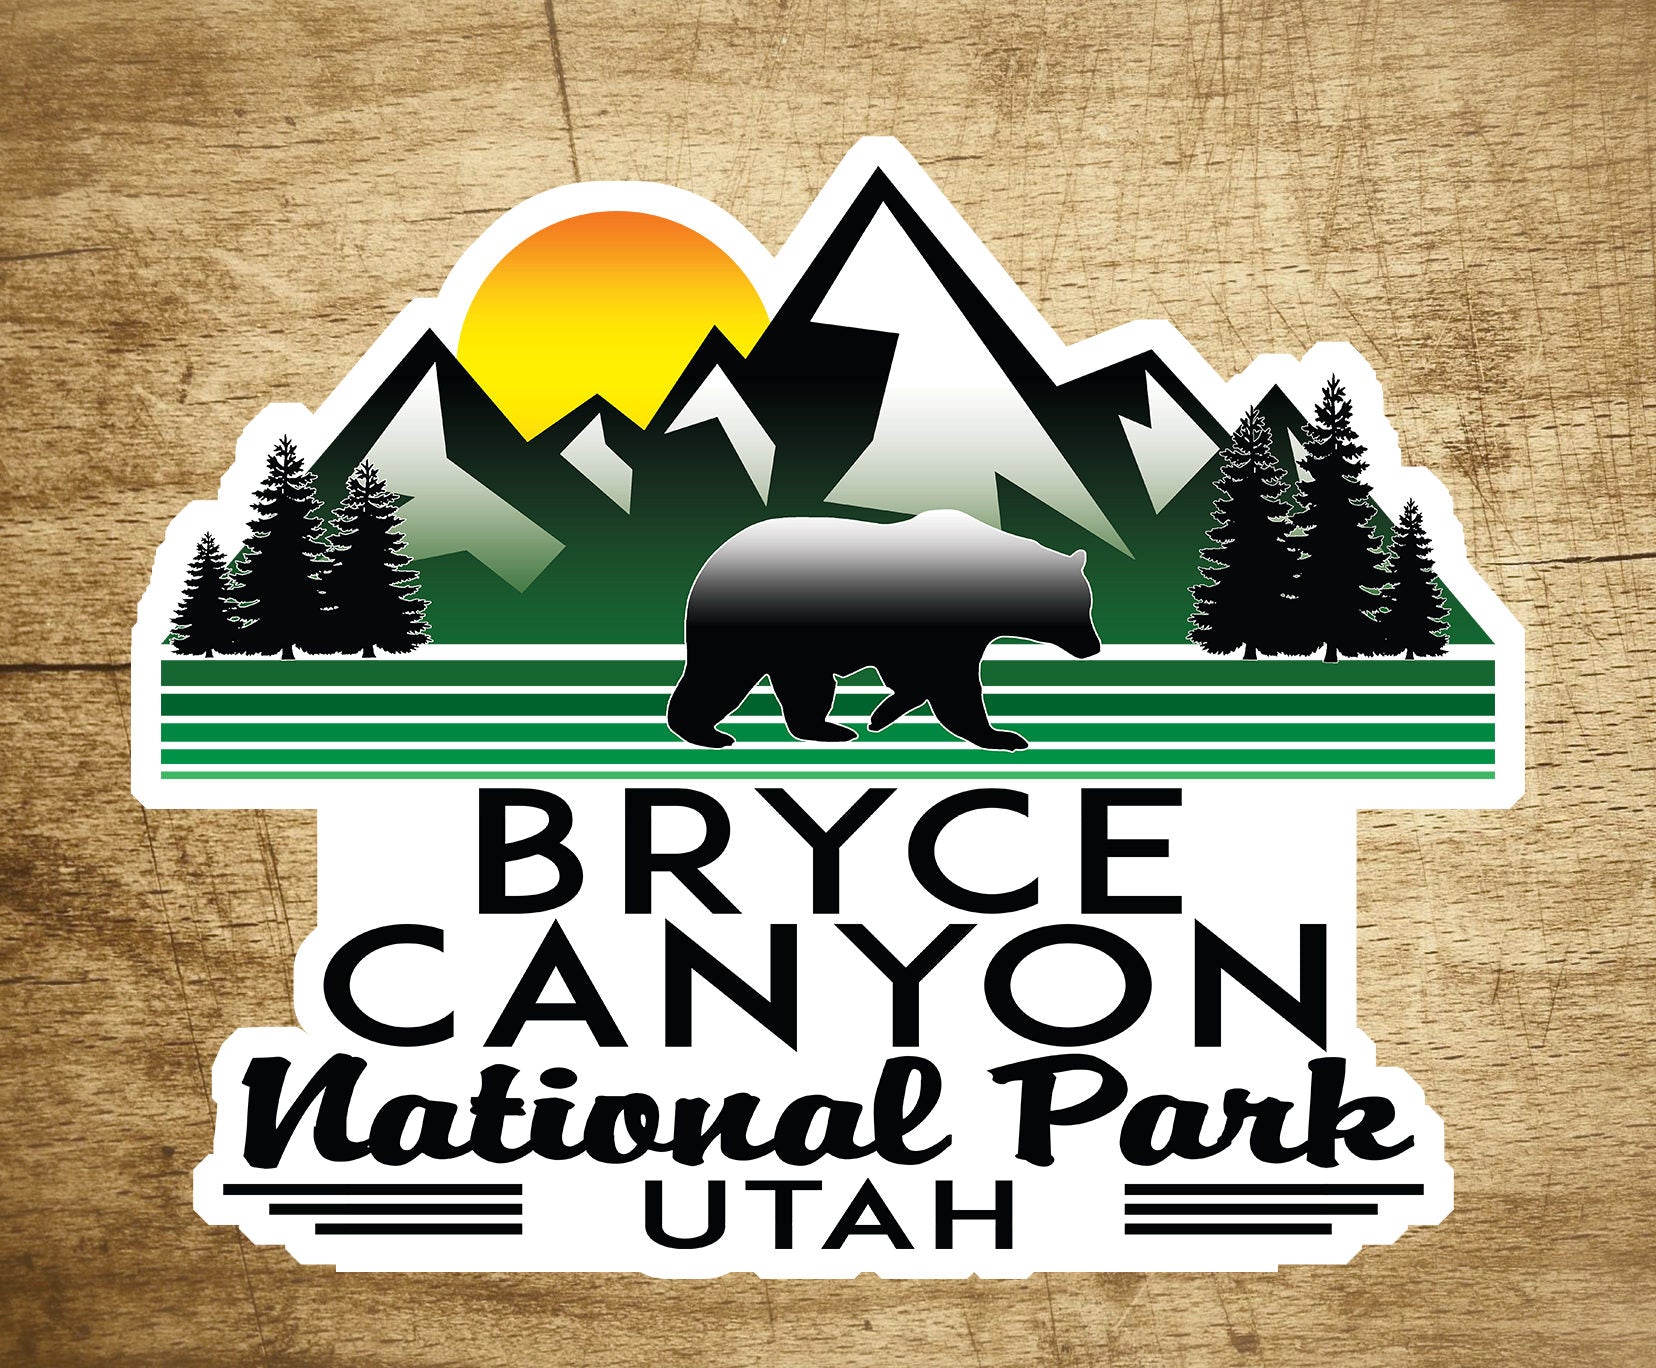 Bryce Canyon National Park UTAH Decal Sticker Vinyl 3.7" x 3"